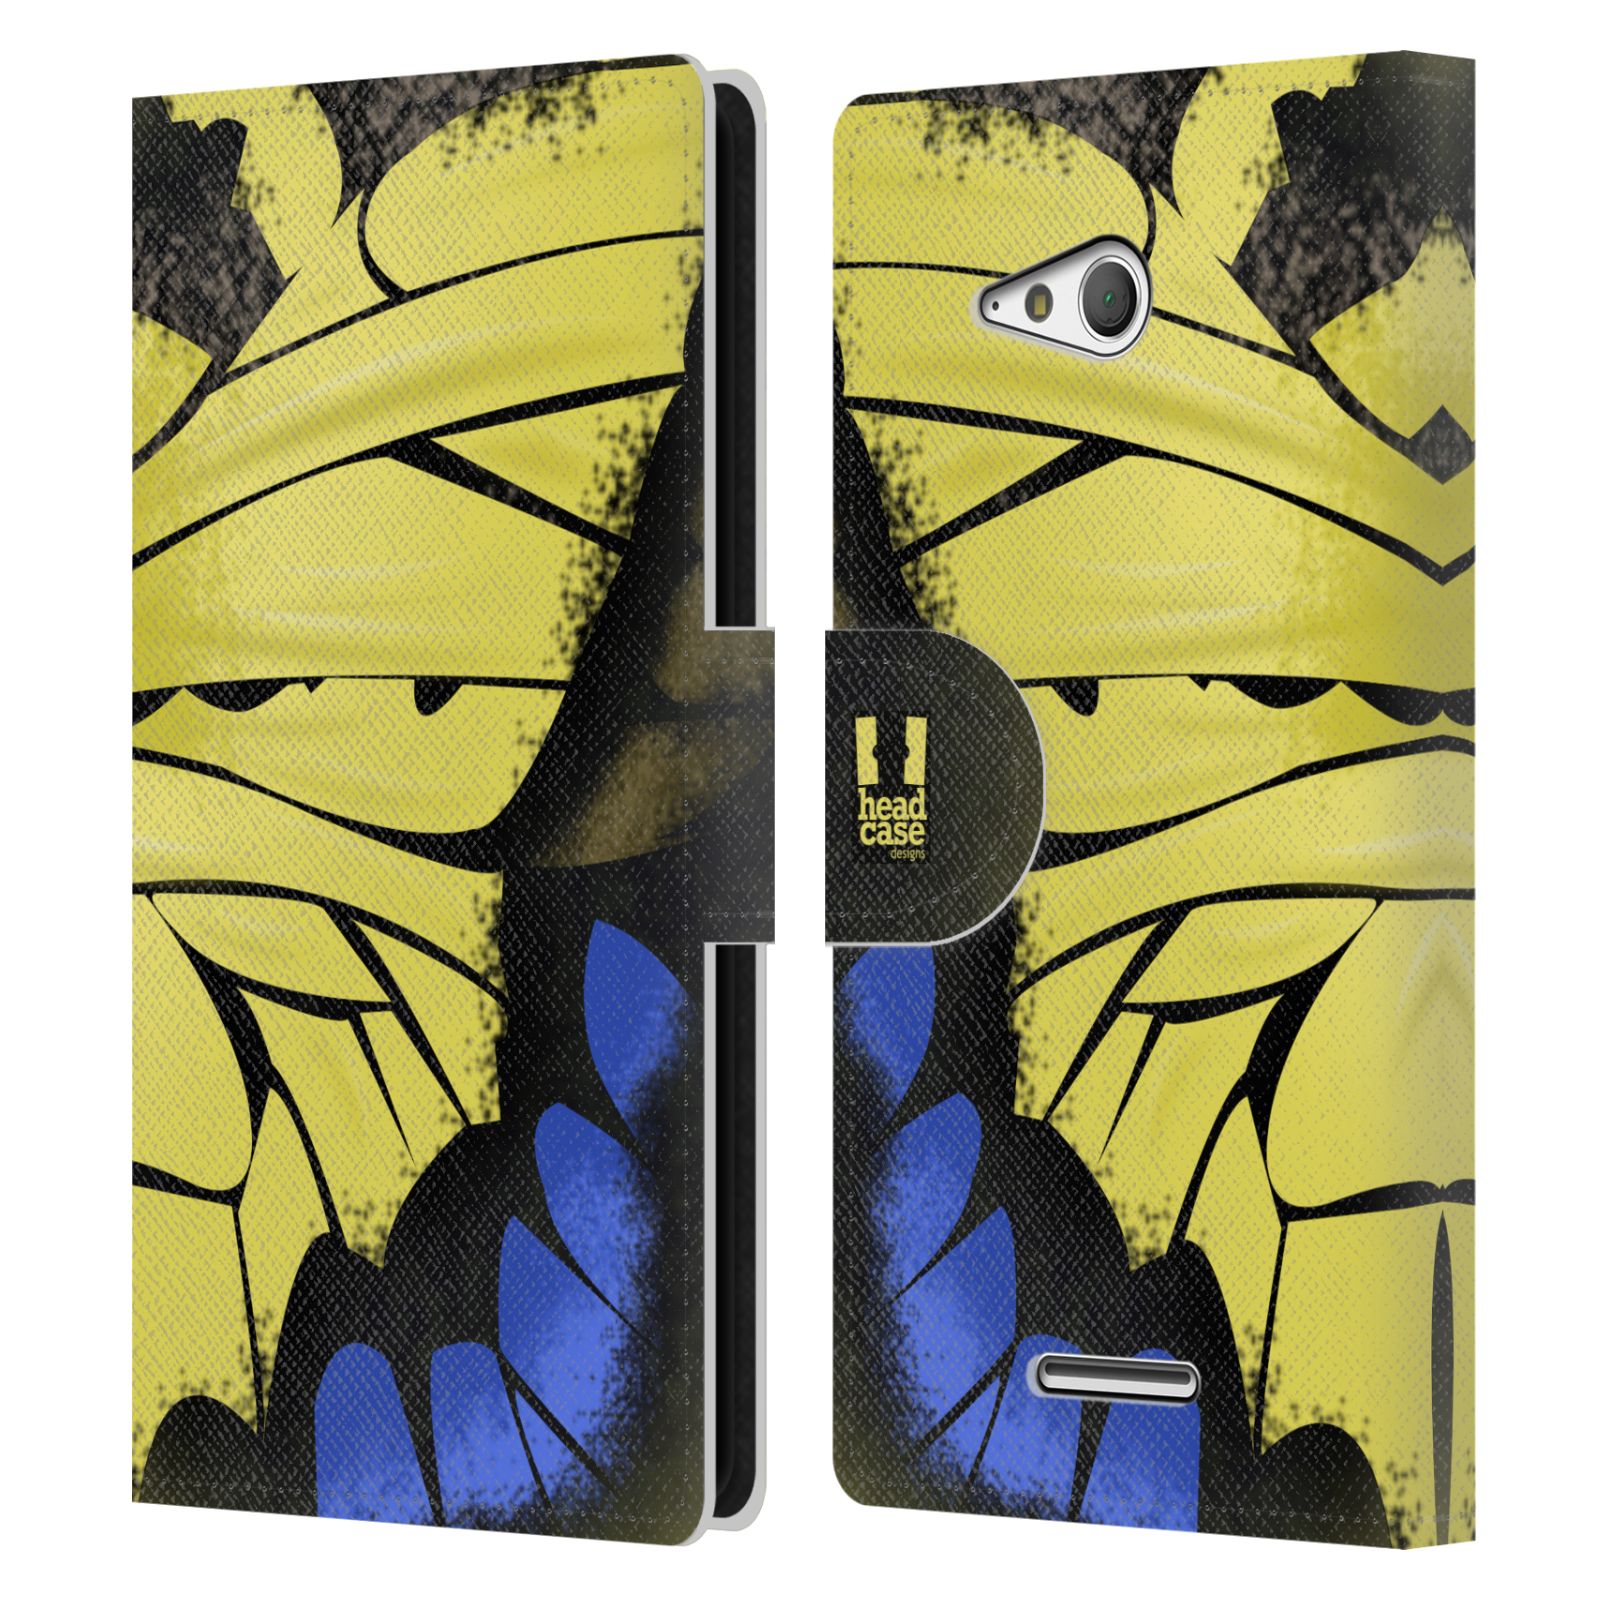 HEAD CASE Flipové pouzdro pro mobil SONY XPERIA E4g motýl a křídla kreslený vzor žlutá a modrá